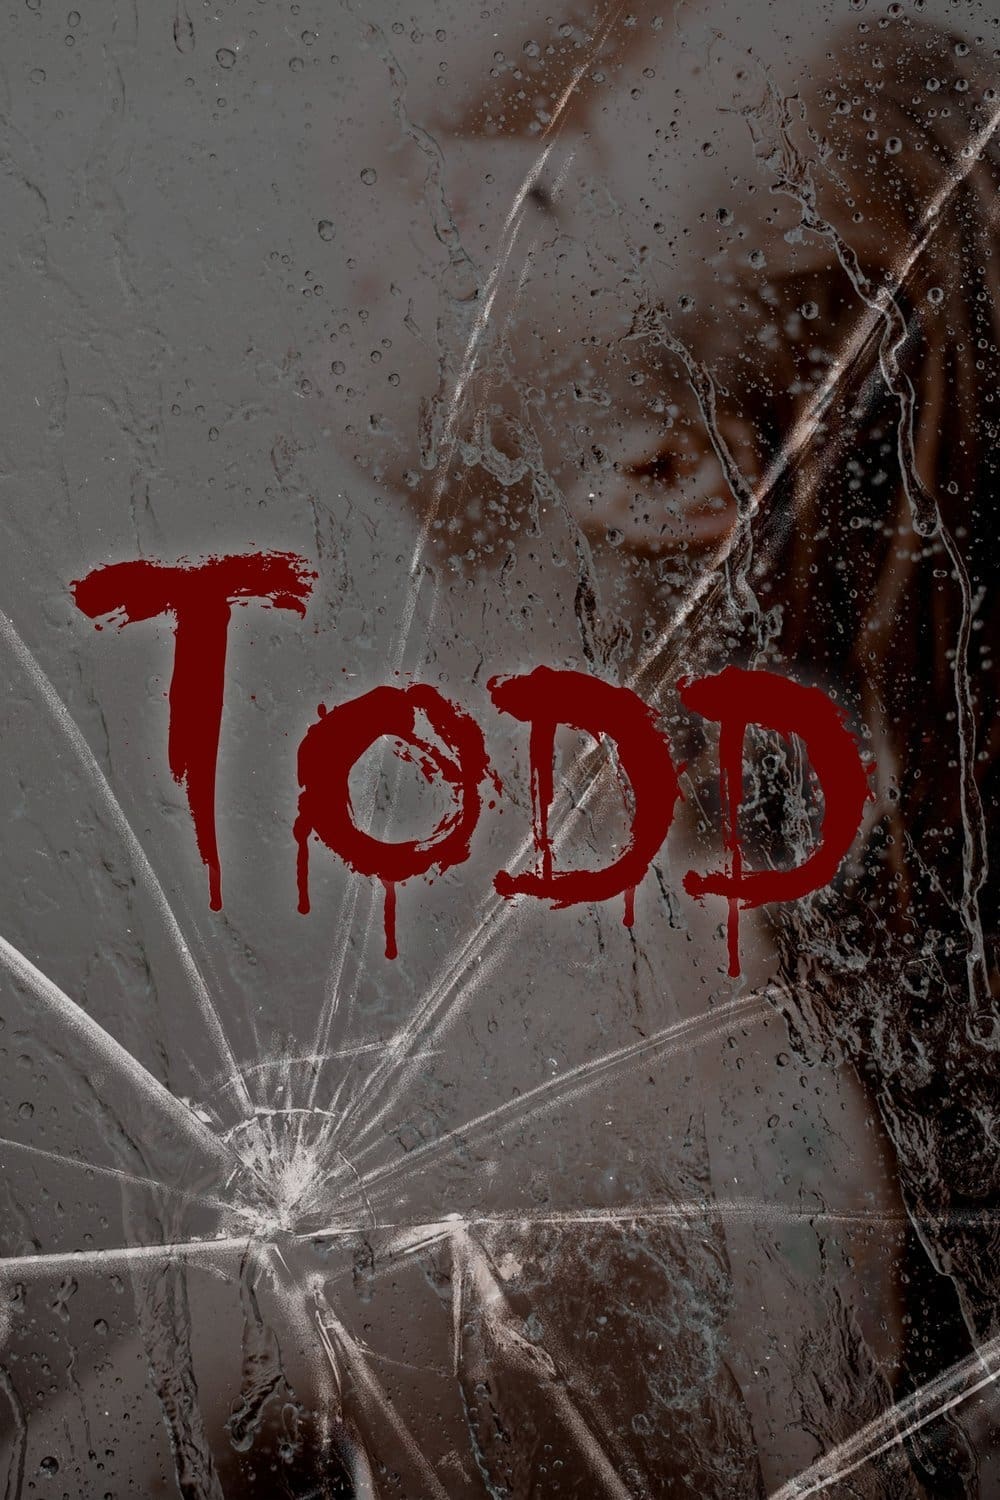 Todd (2021)